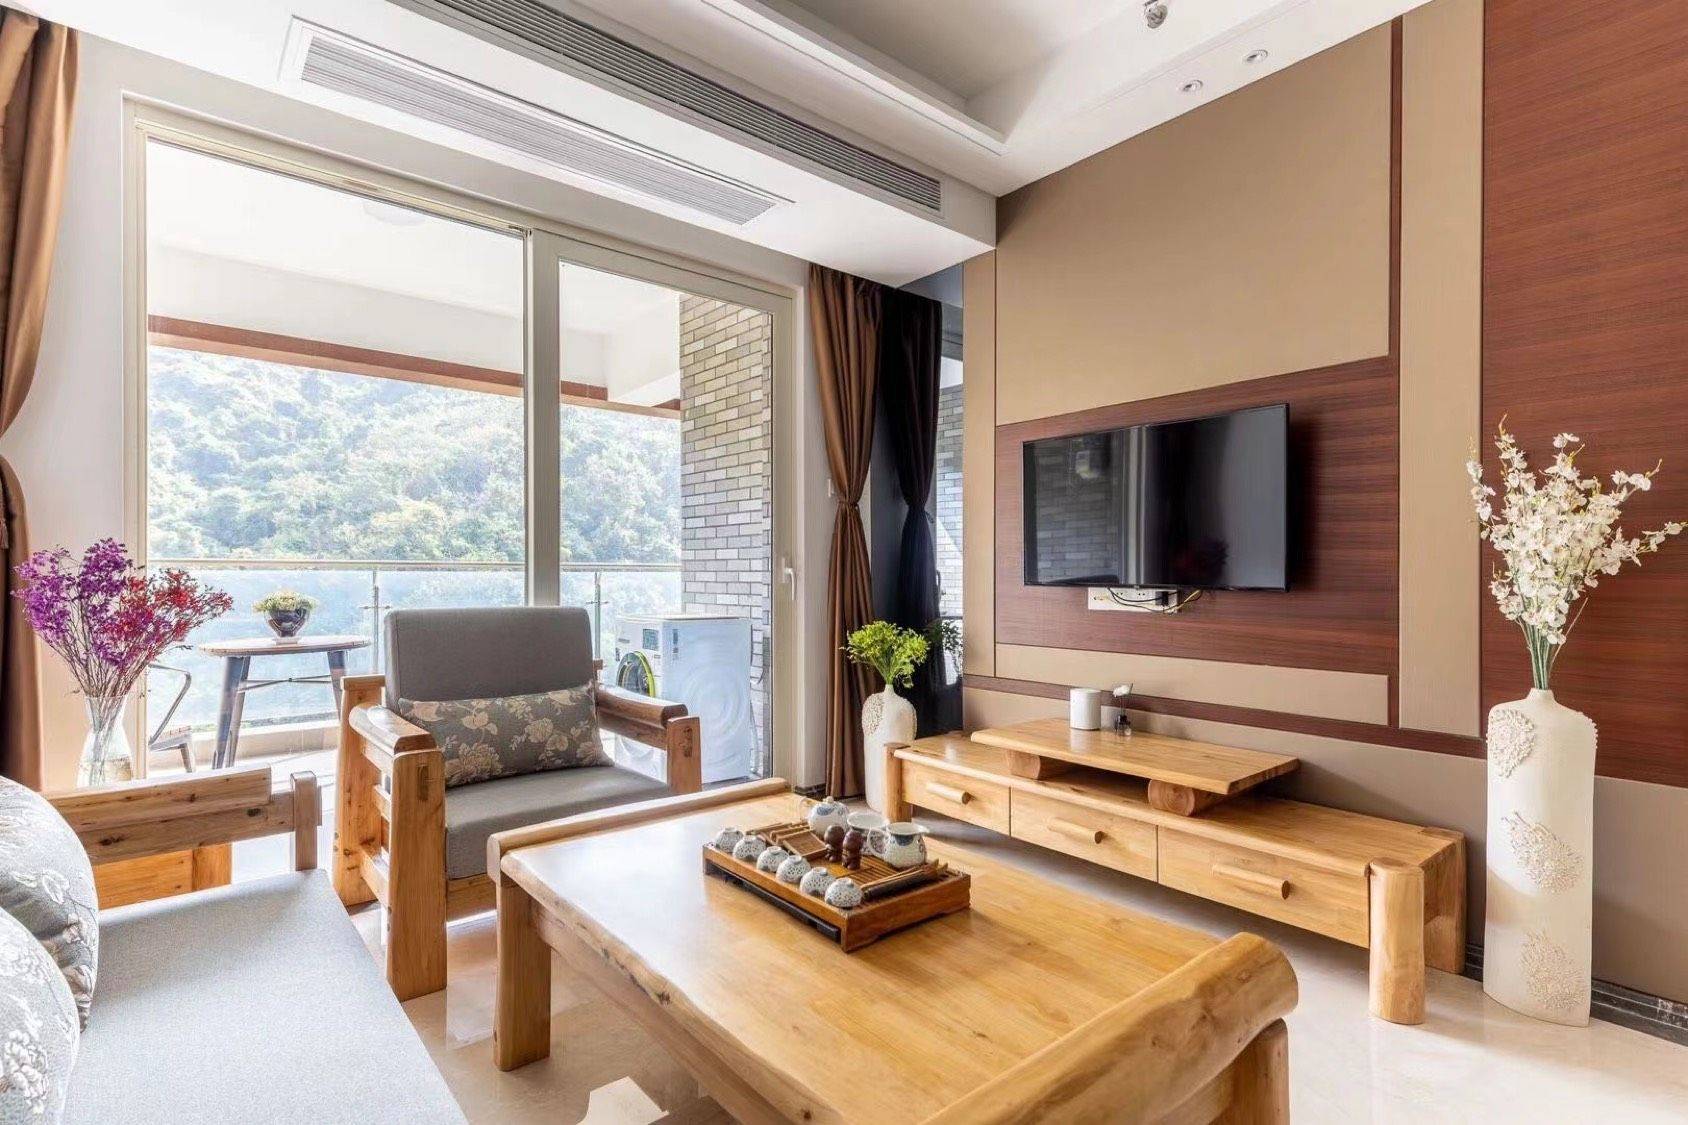 Sanya-Jiyang-Cozy Home,Clean&Comfy,No Gender Limit,Chilled